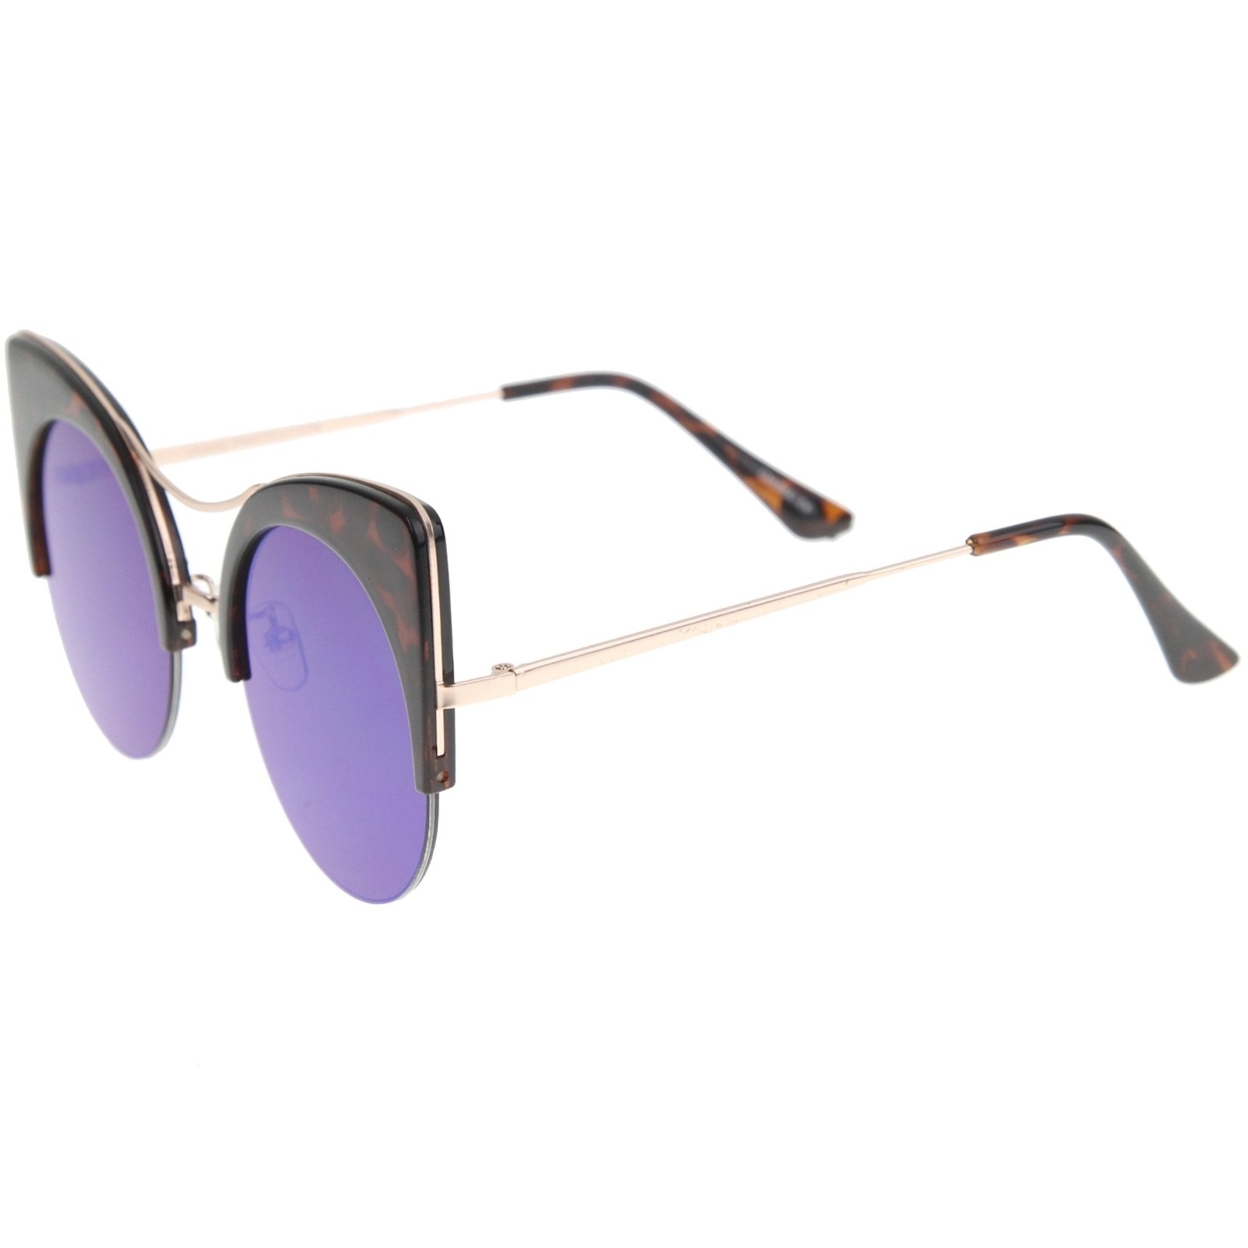 Womens Oversized Half Frame Semi-Rimless Flat Lens Round Cat Eye Sunglasses 60mm - Black-Gold / Midnight